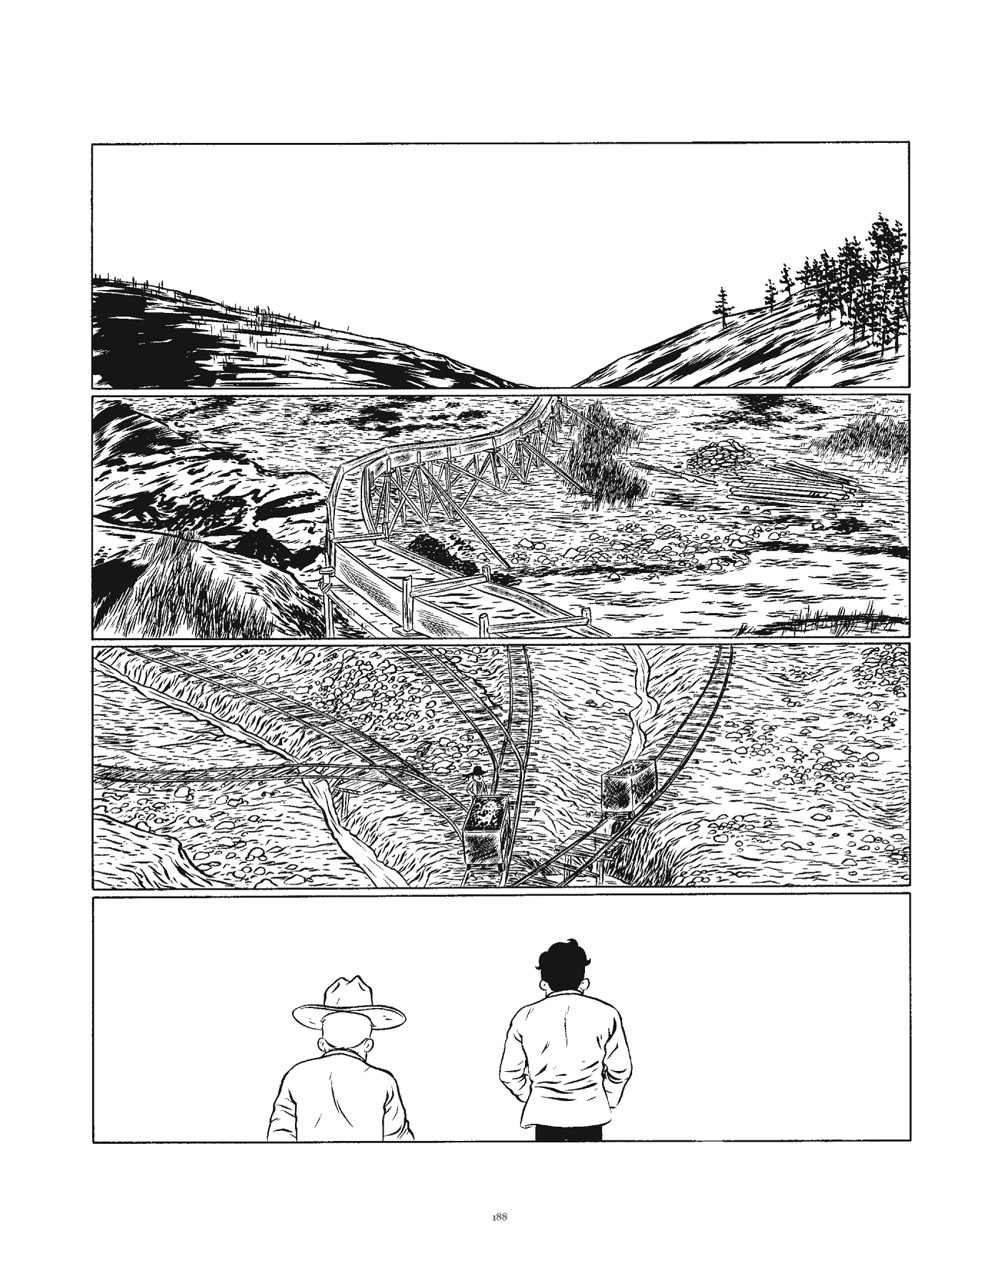 The Klondike Page 188